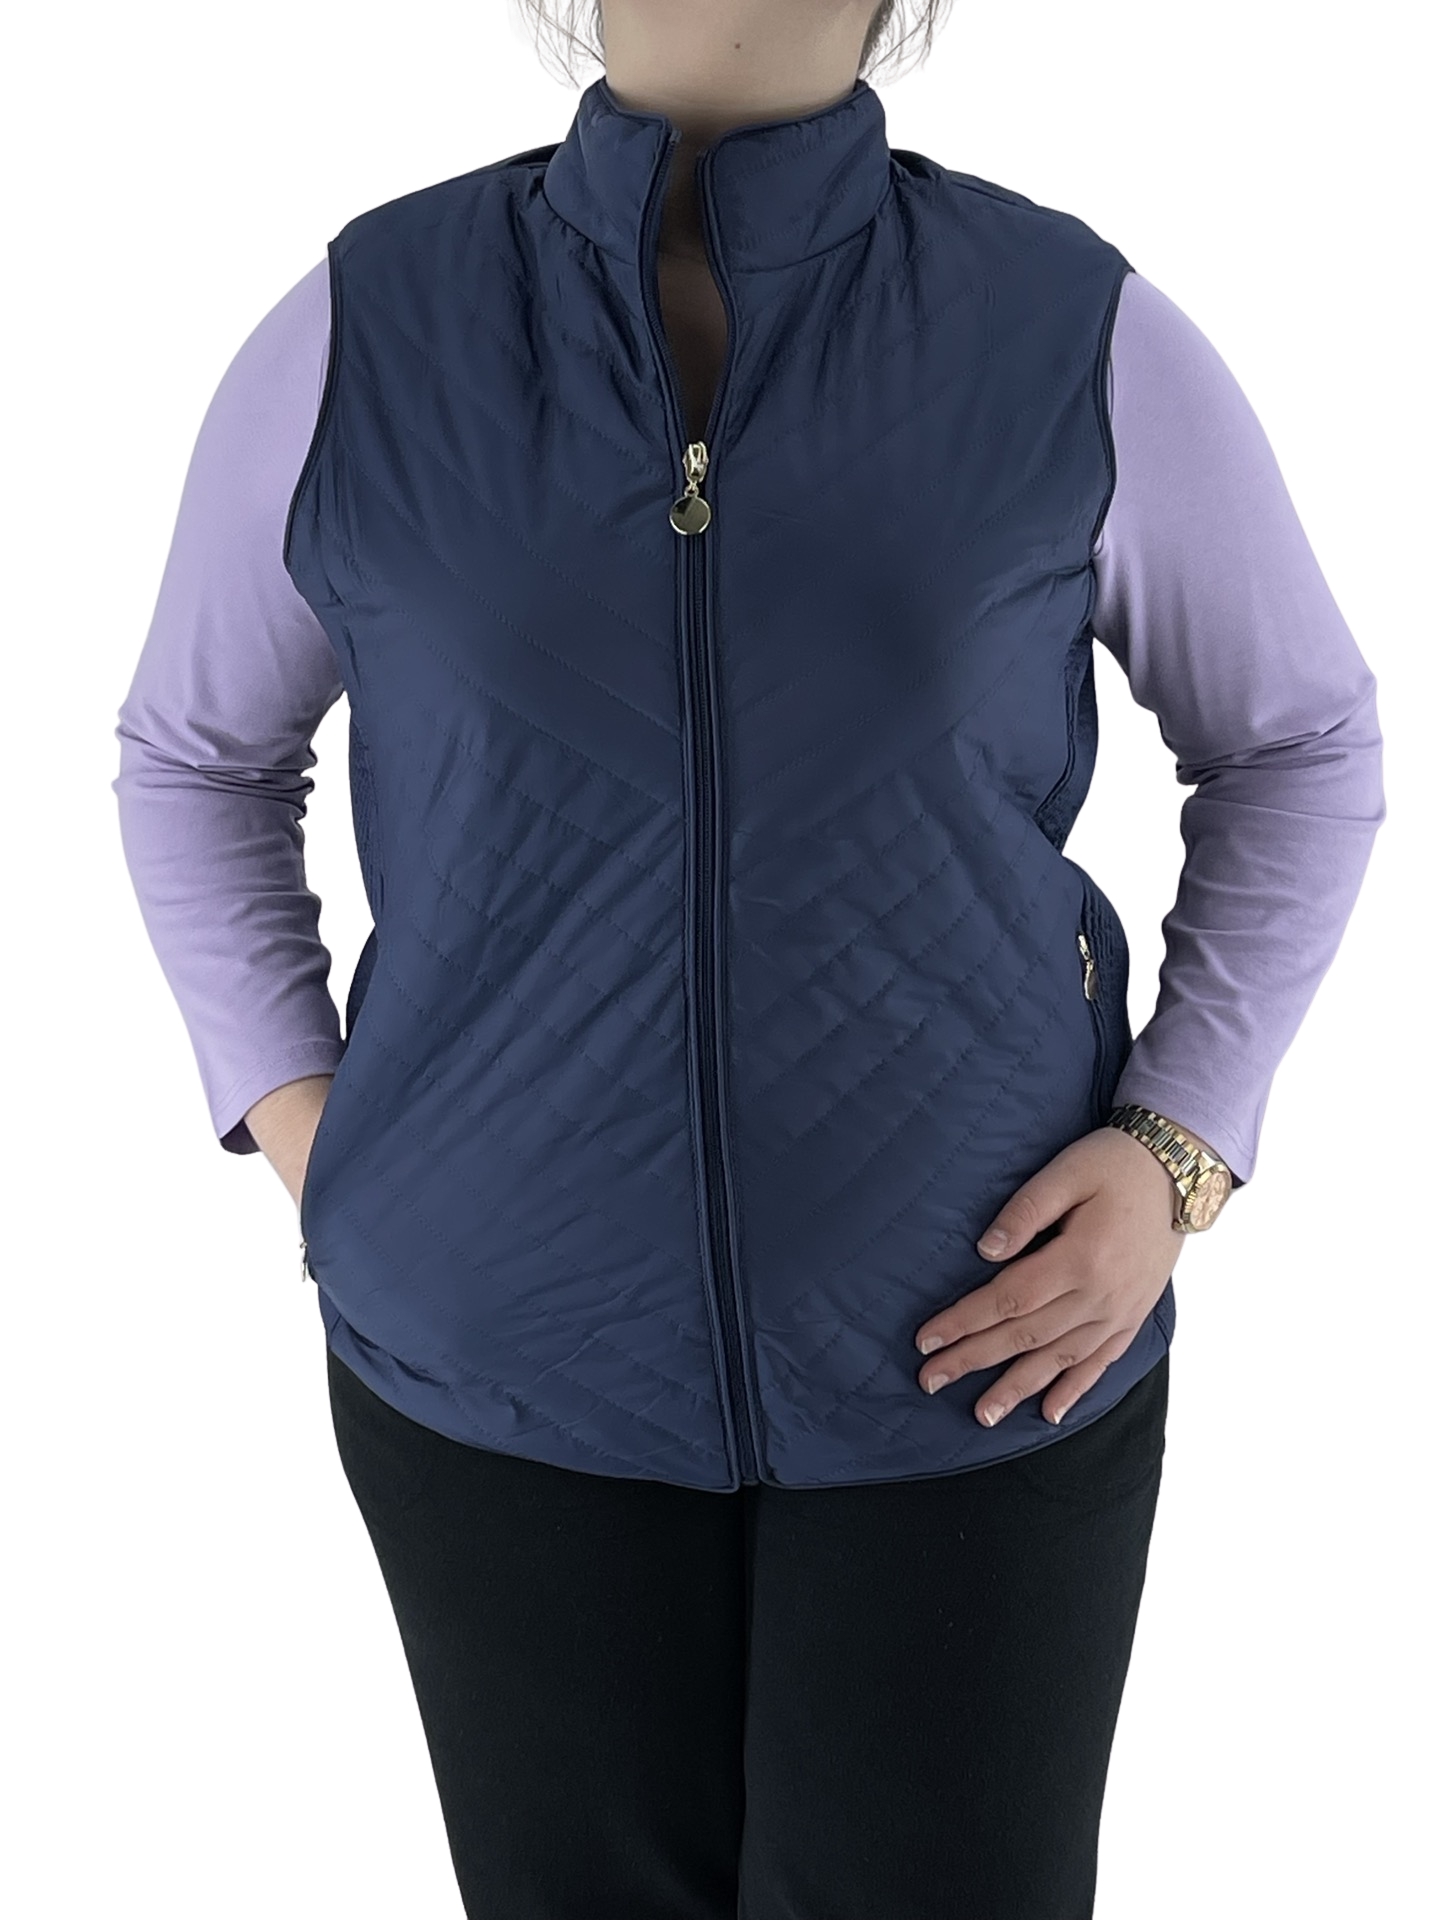 Women's sleeveless jacket with elastic band code A2110